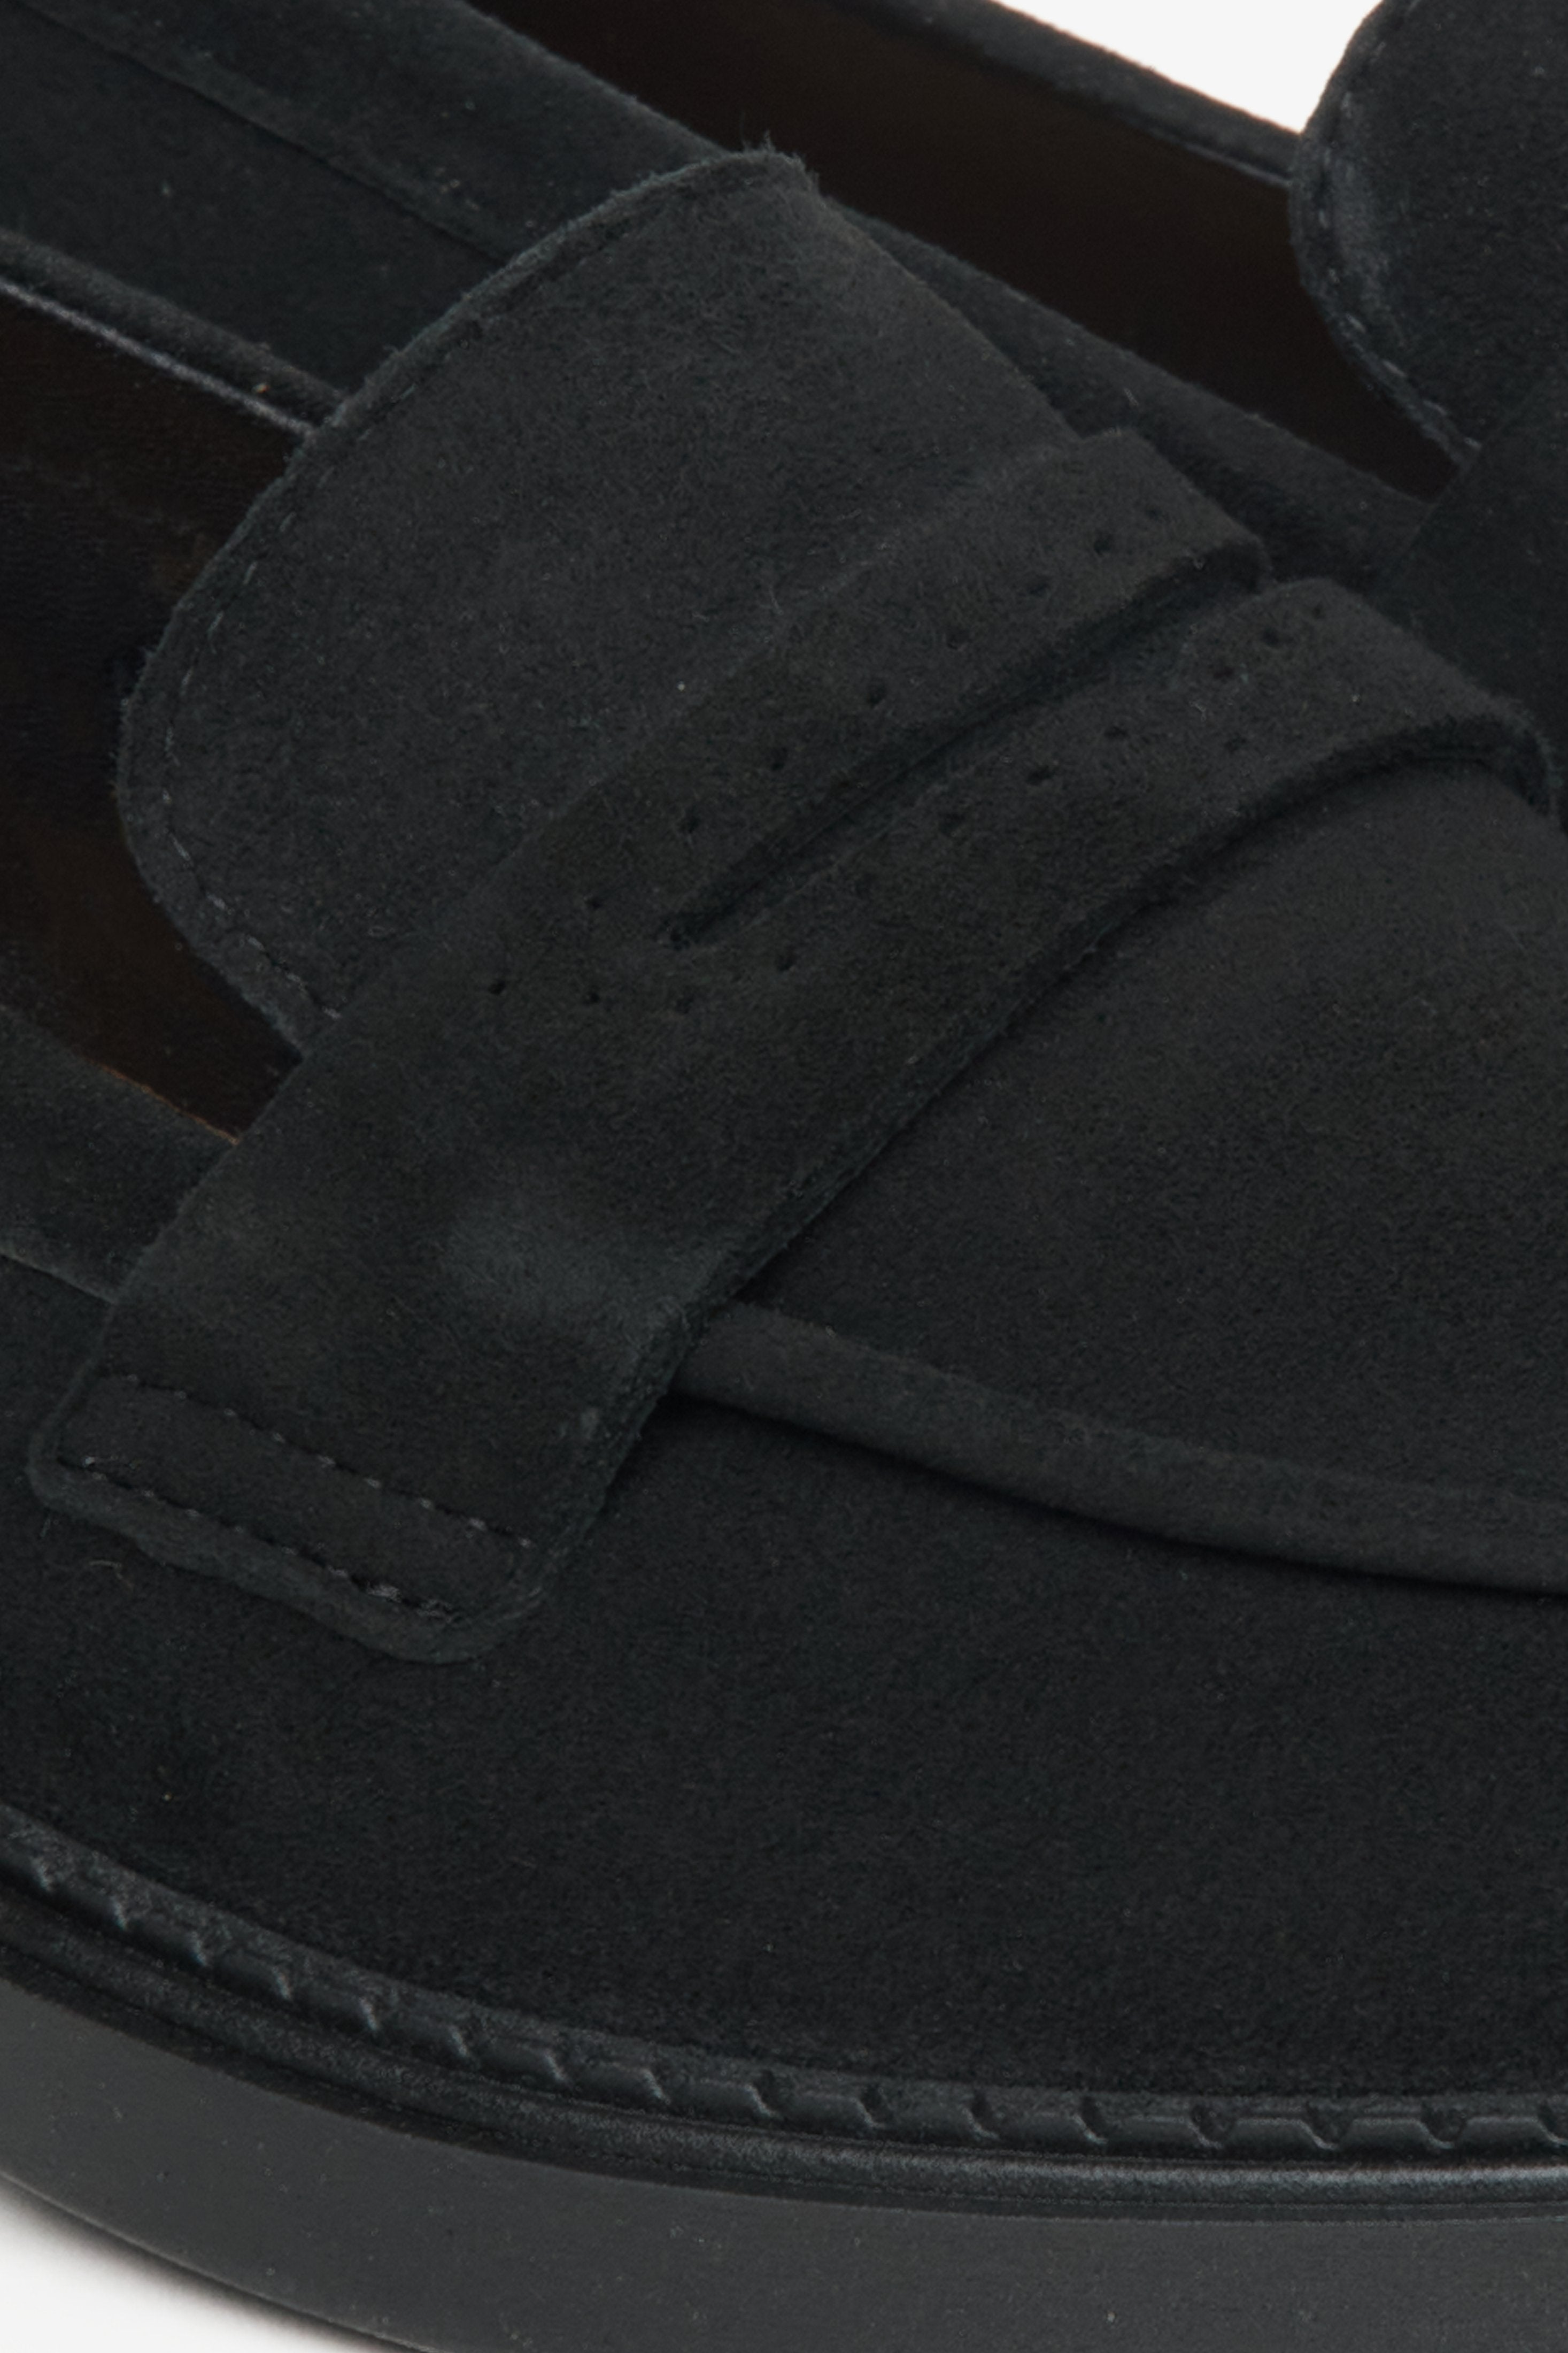 Black velour loafers for women Estro - close-up on details.